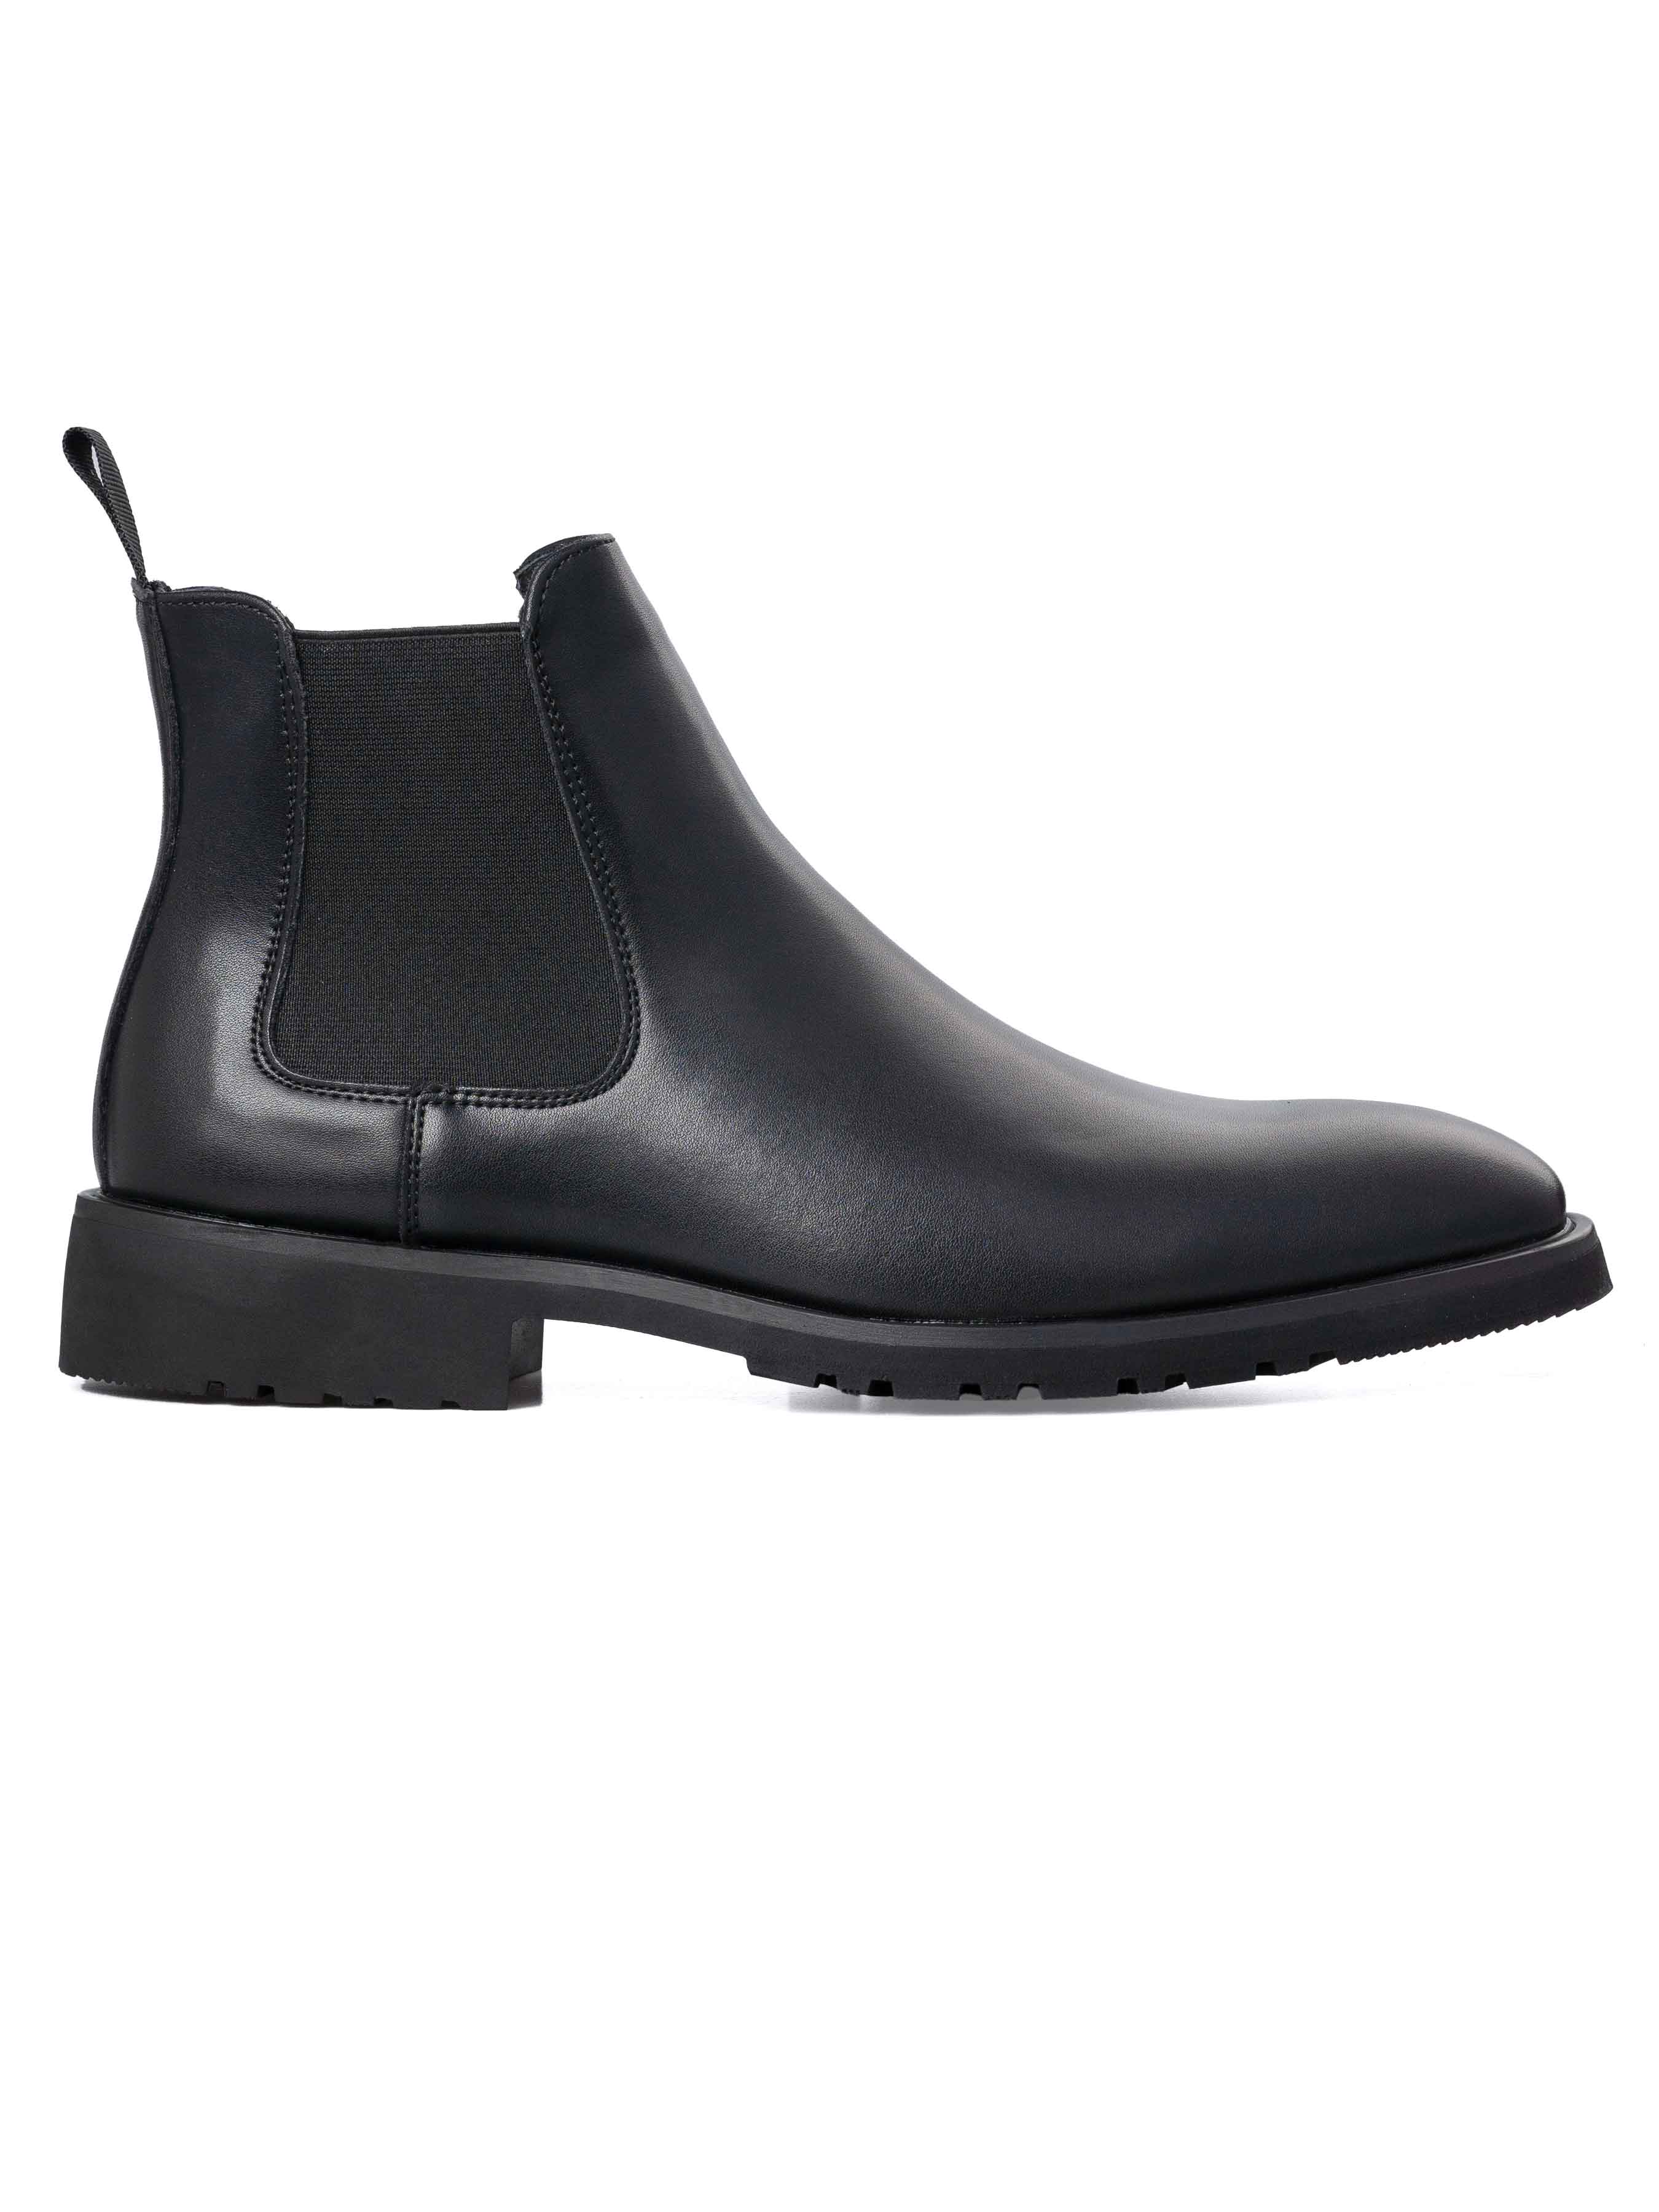 Dex Chelsea Boots - Solid Black (Flexi-Sole)